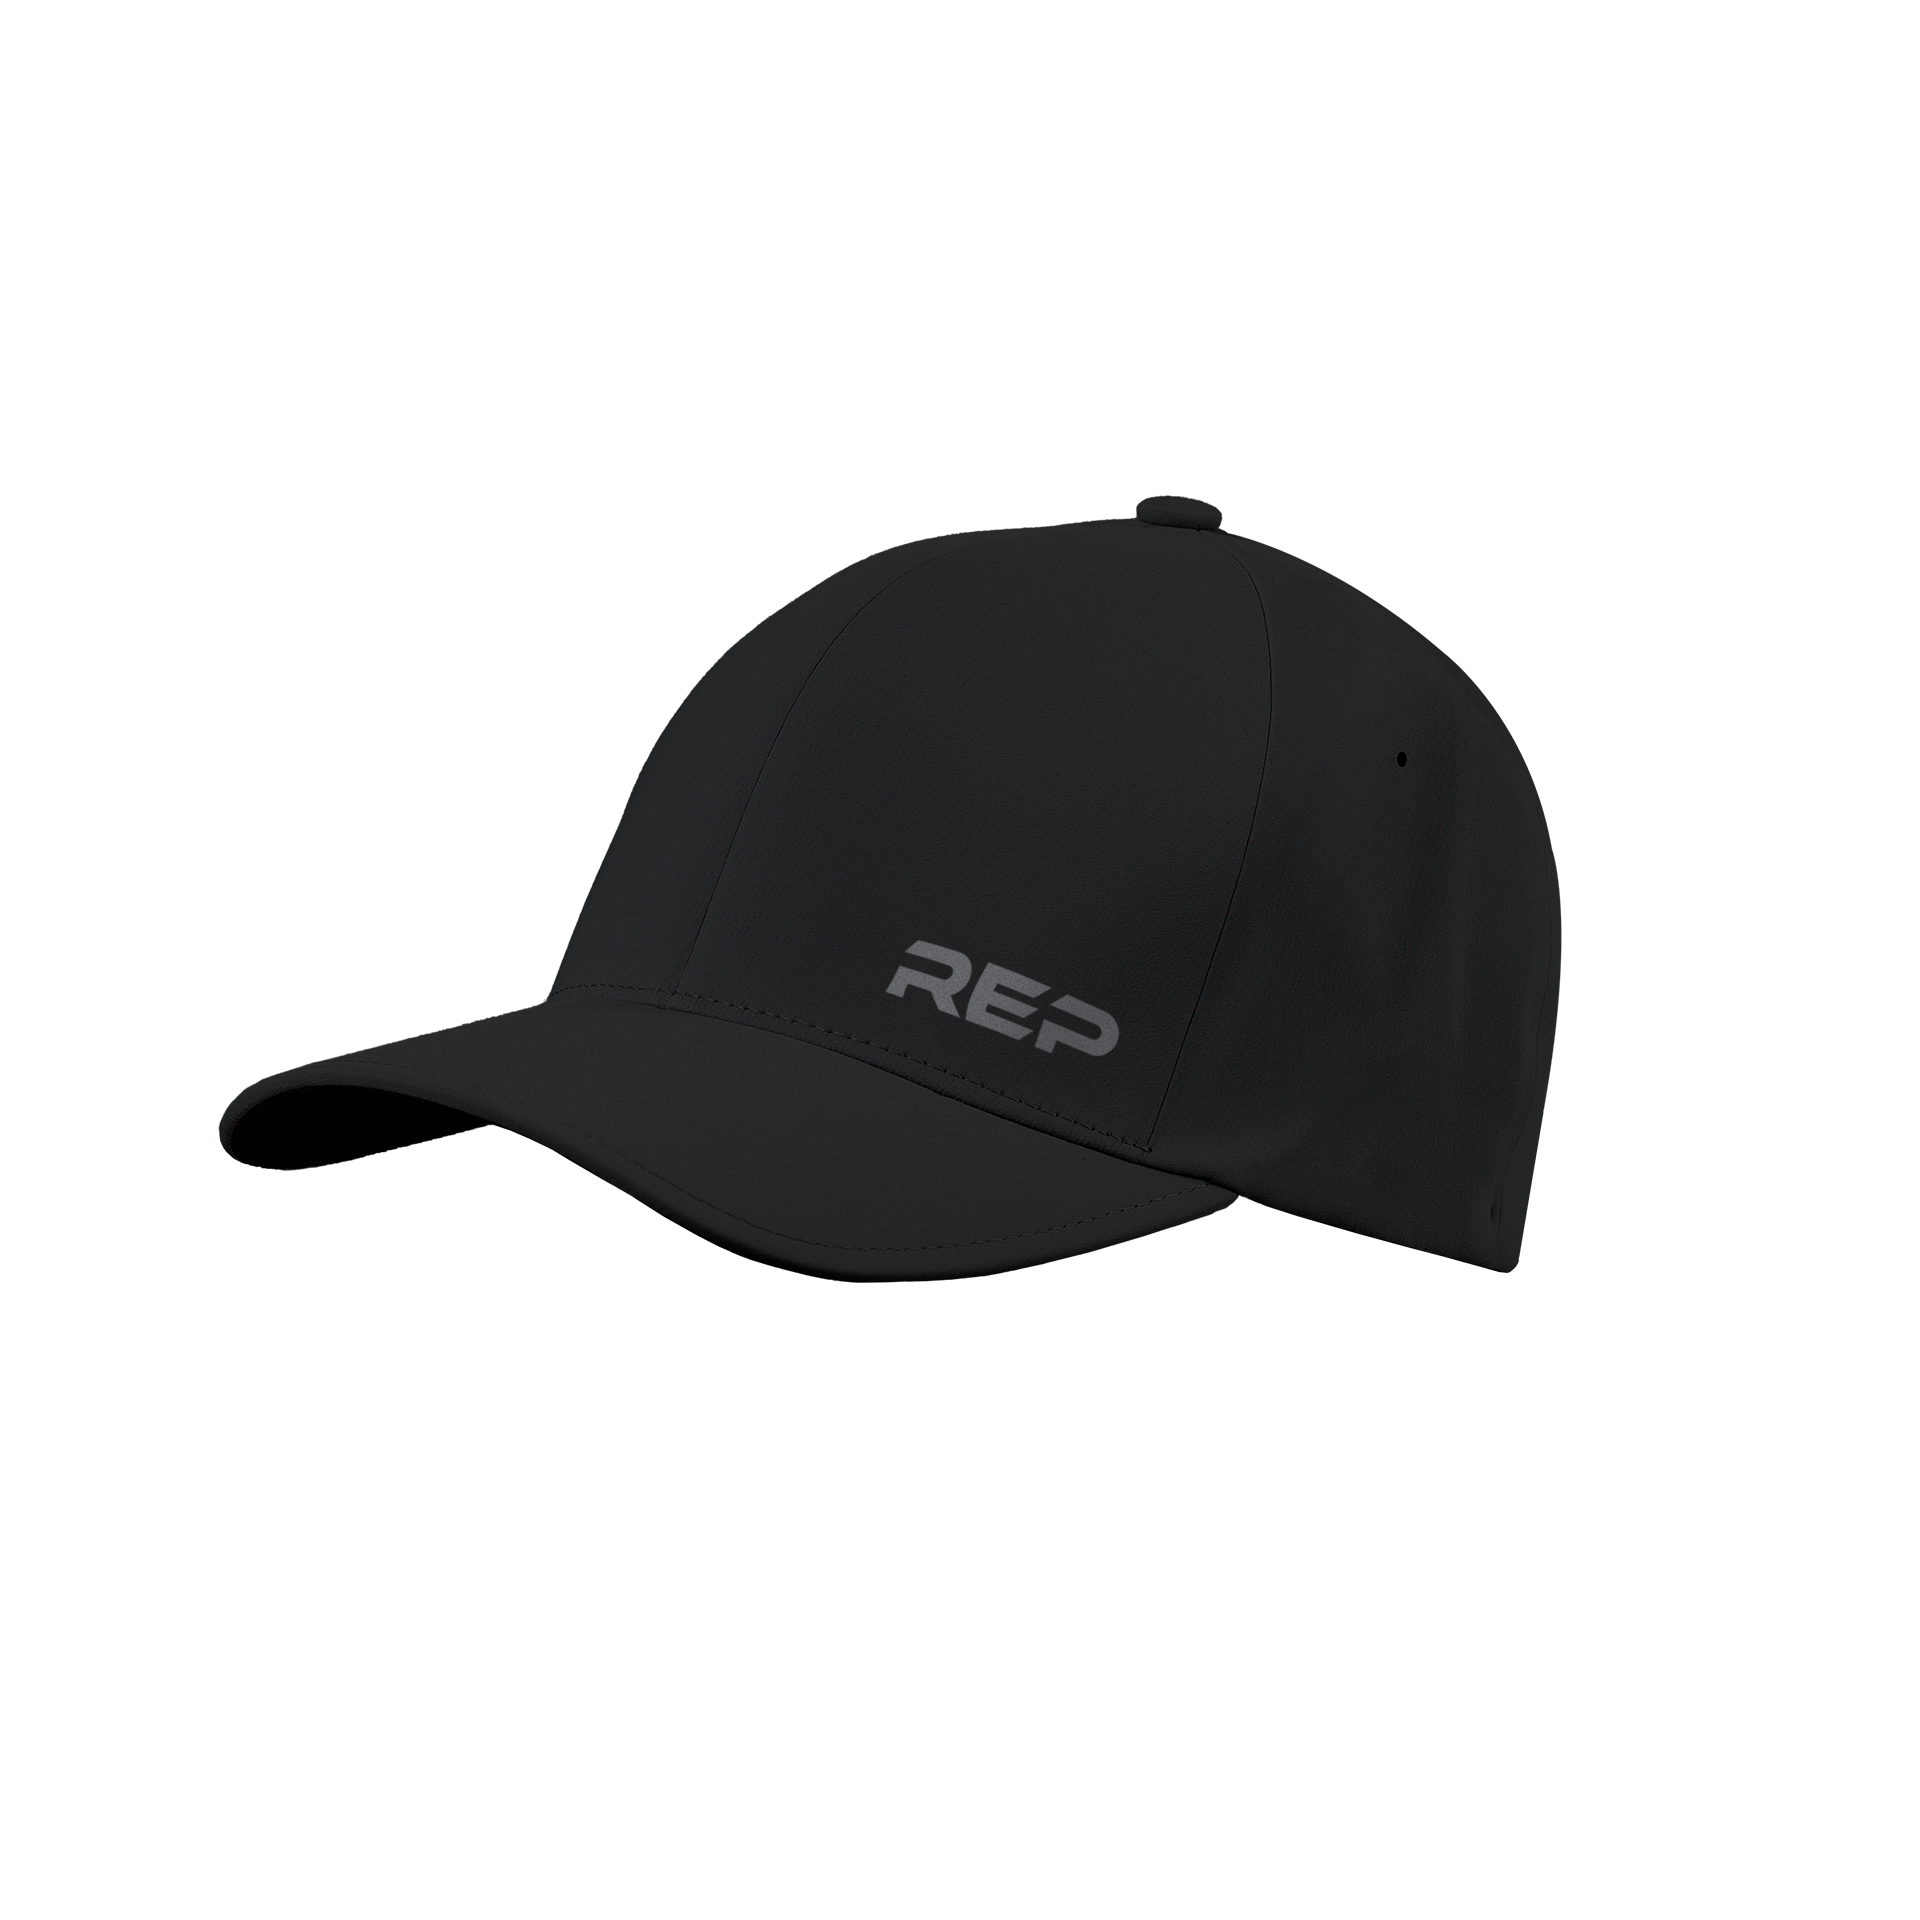 REP Performance Cap - Black/Cool Gray / S/M (6 3/4